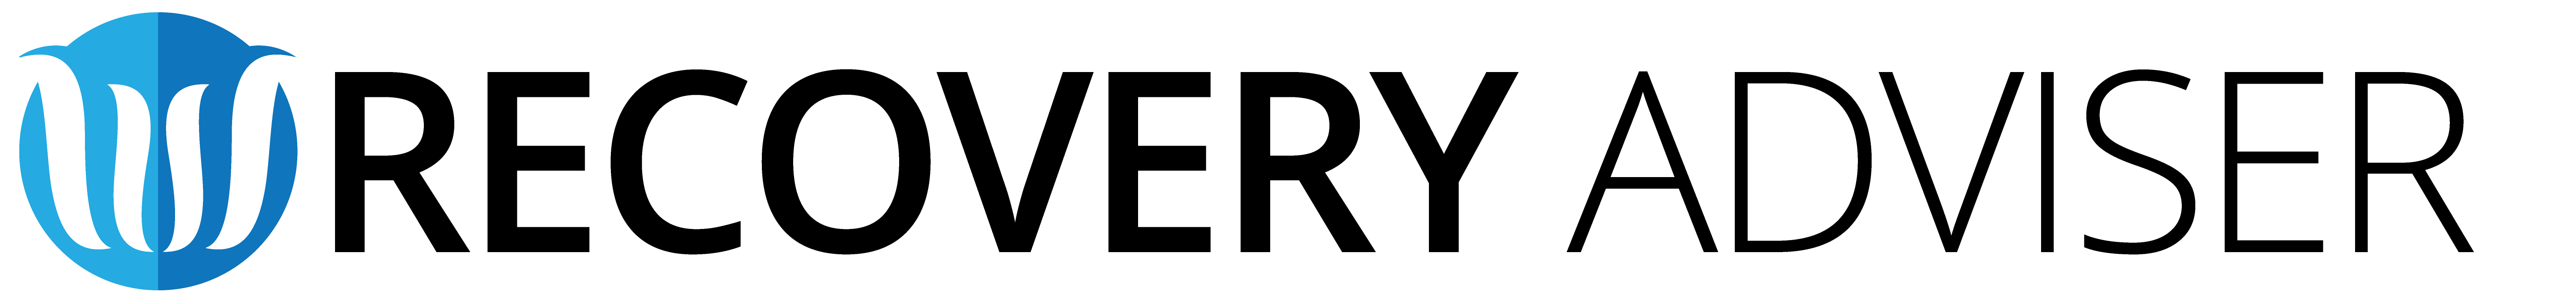 recovery-adviser-logo